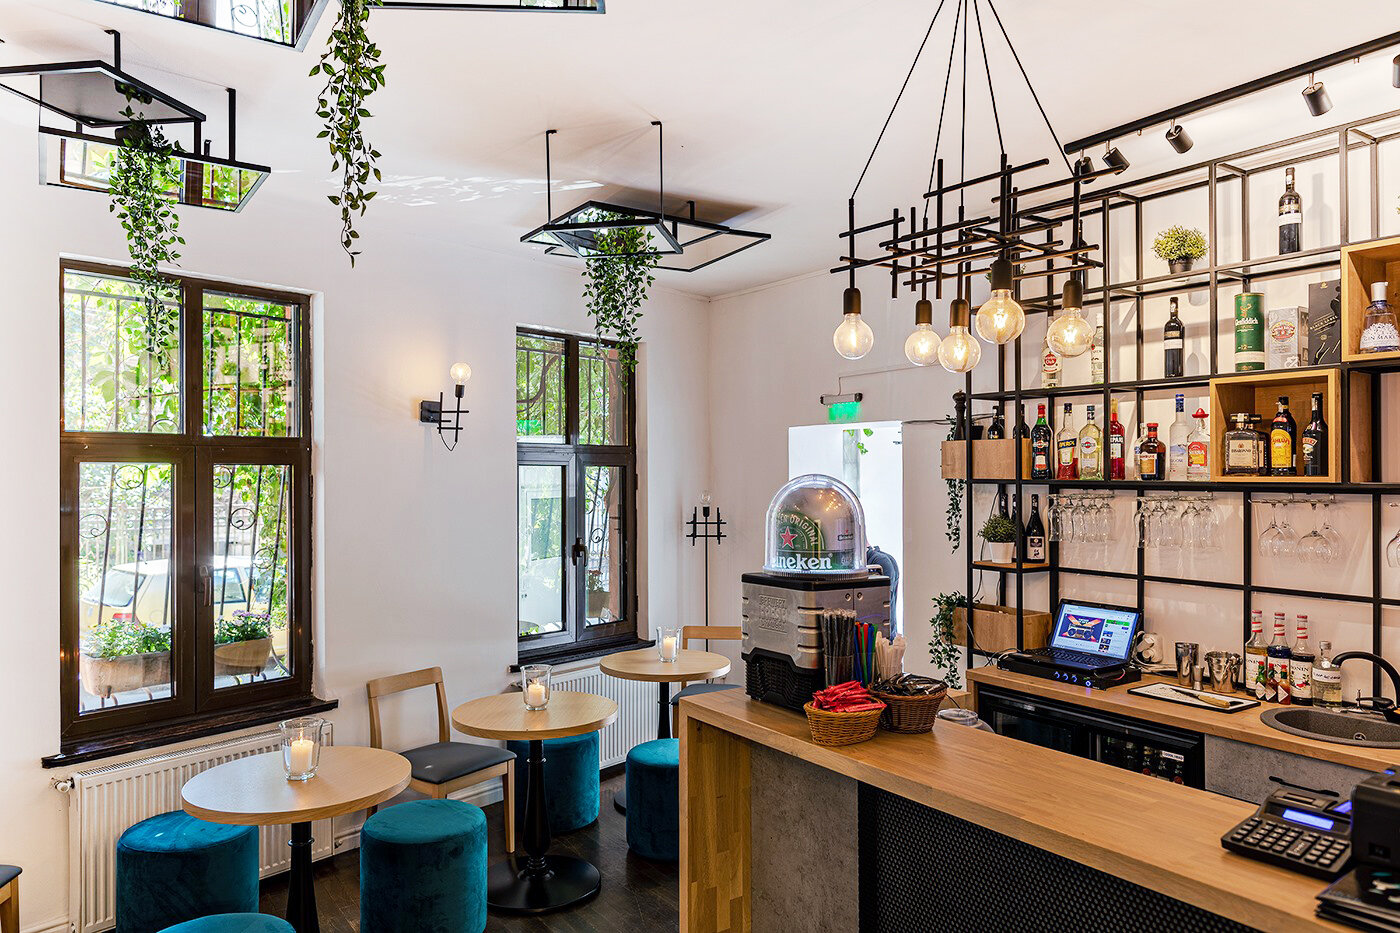 Interior design for “Nice Touch” Restaurant